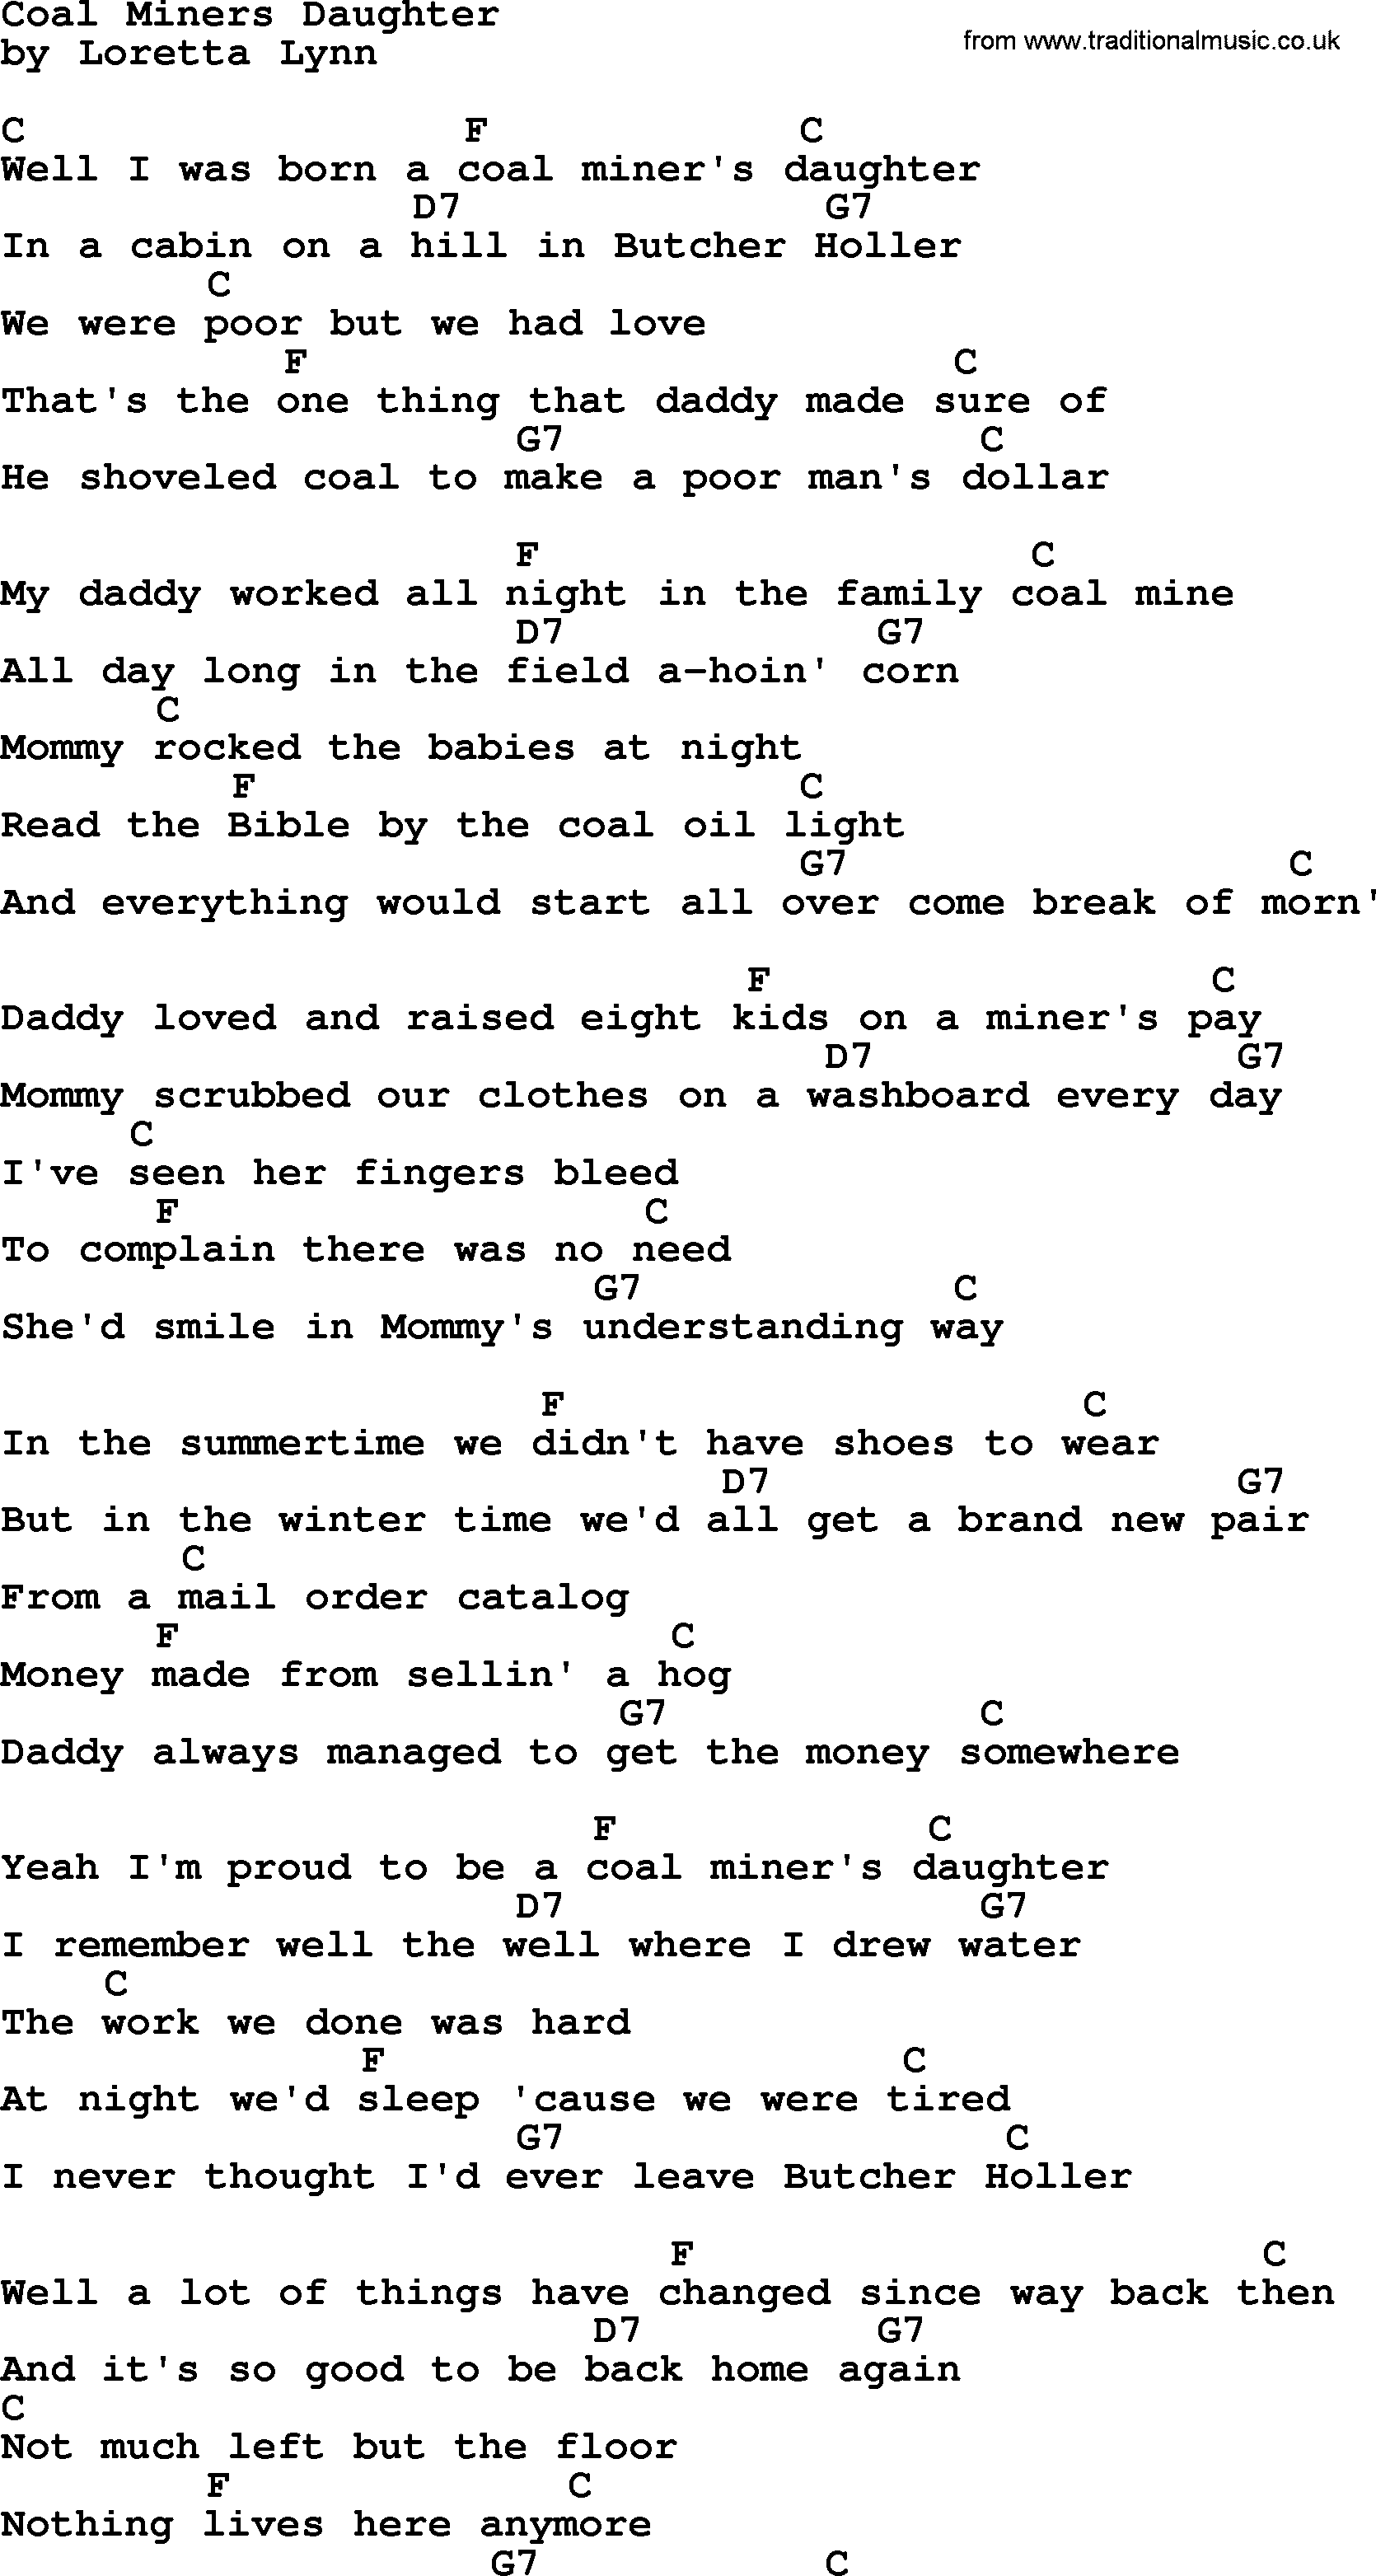 Loretta Lynn song: Coal Miners Daughter lyrics and chords